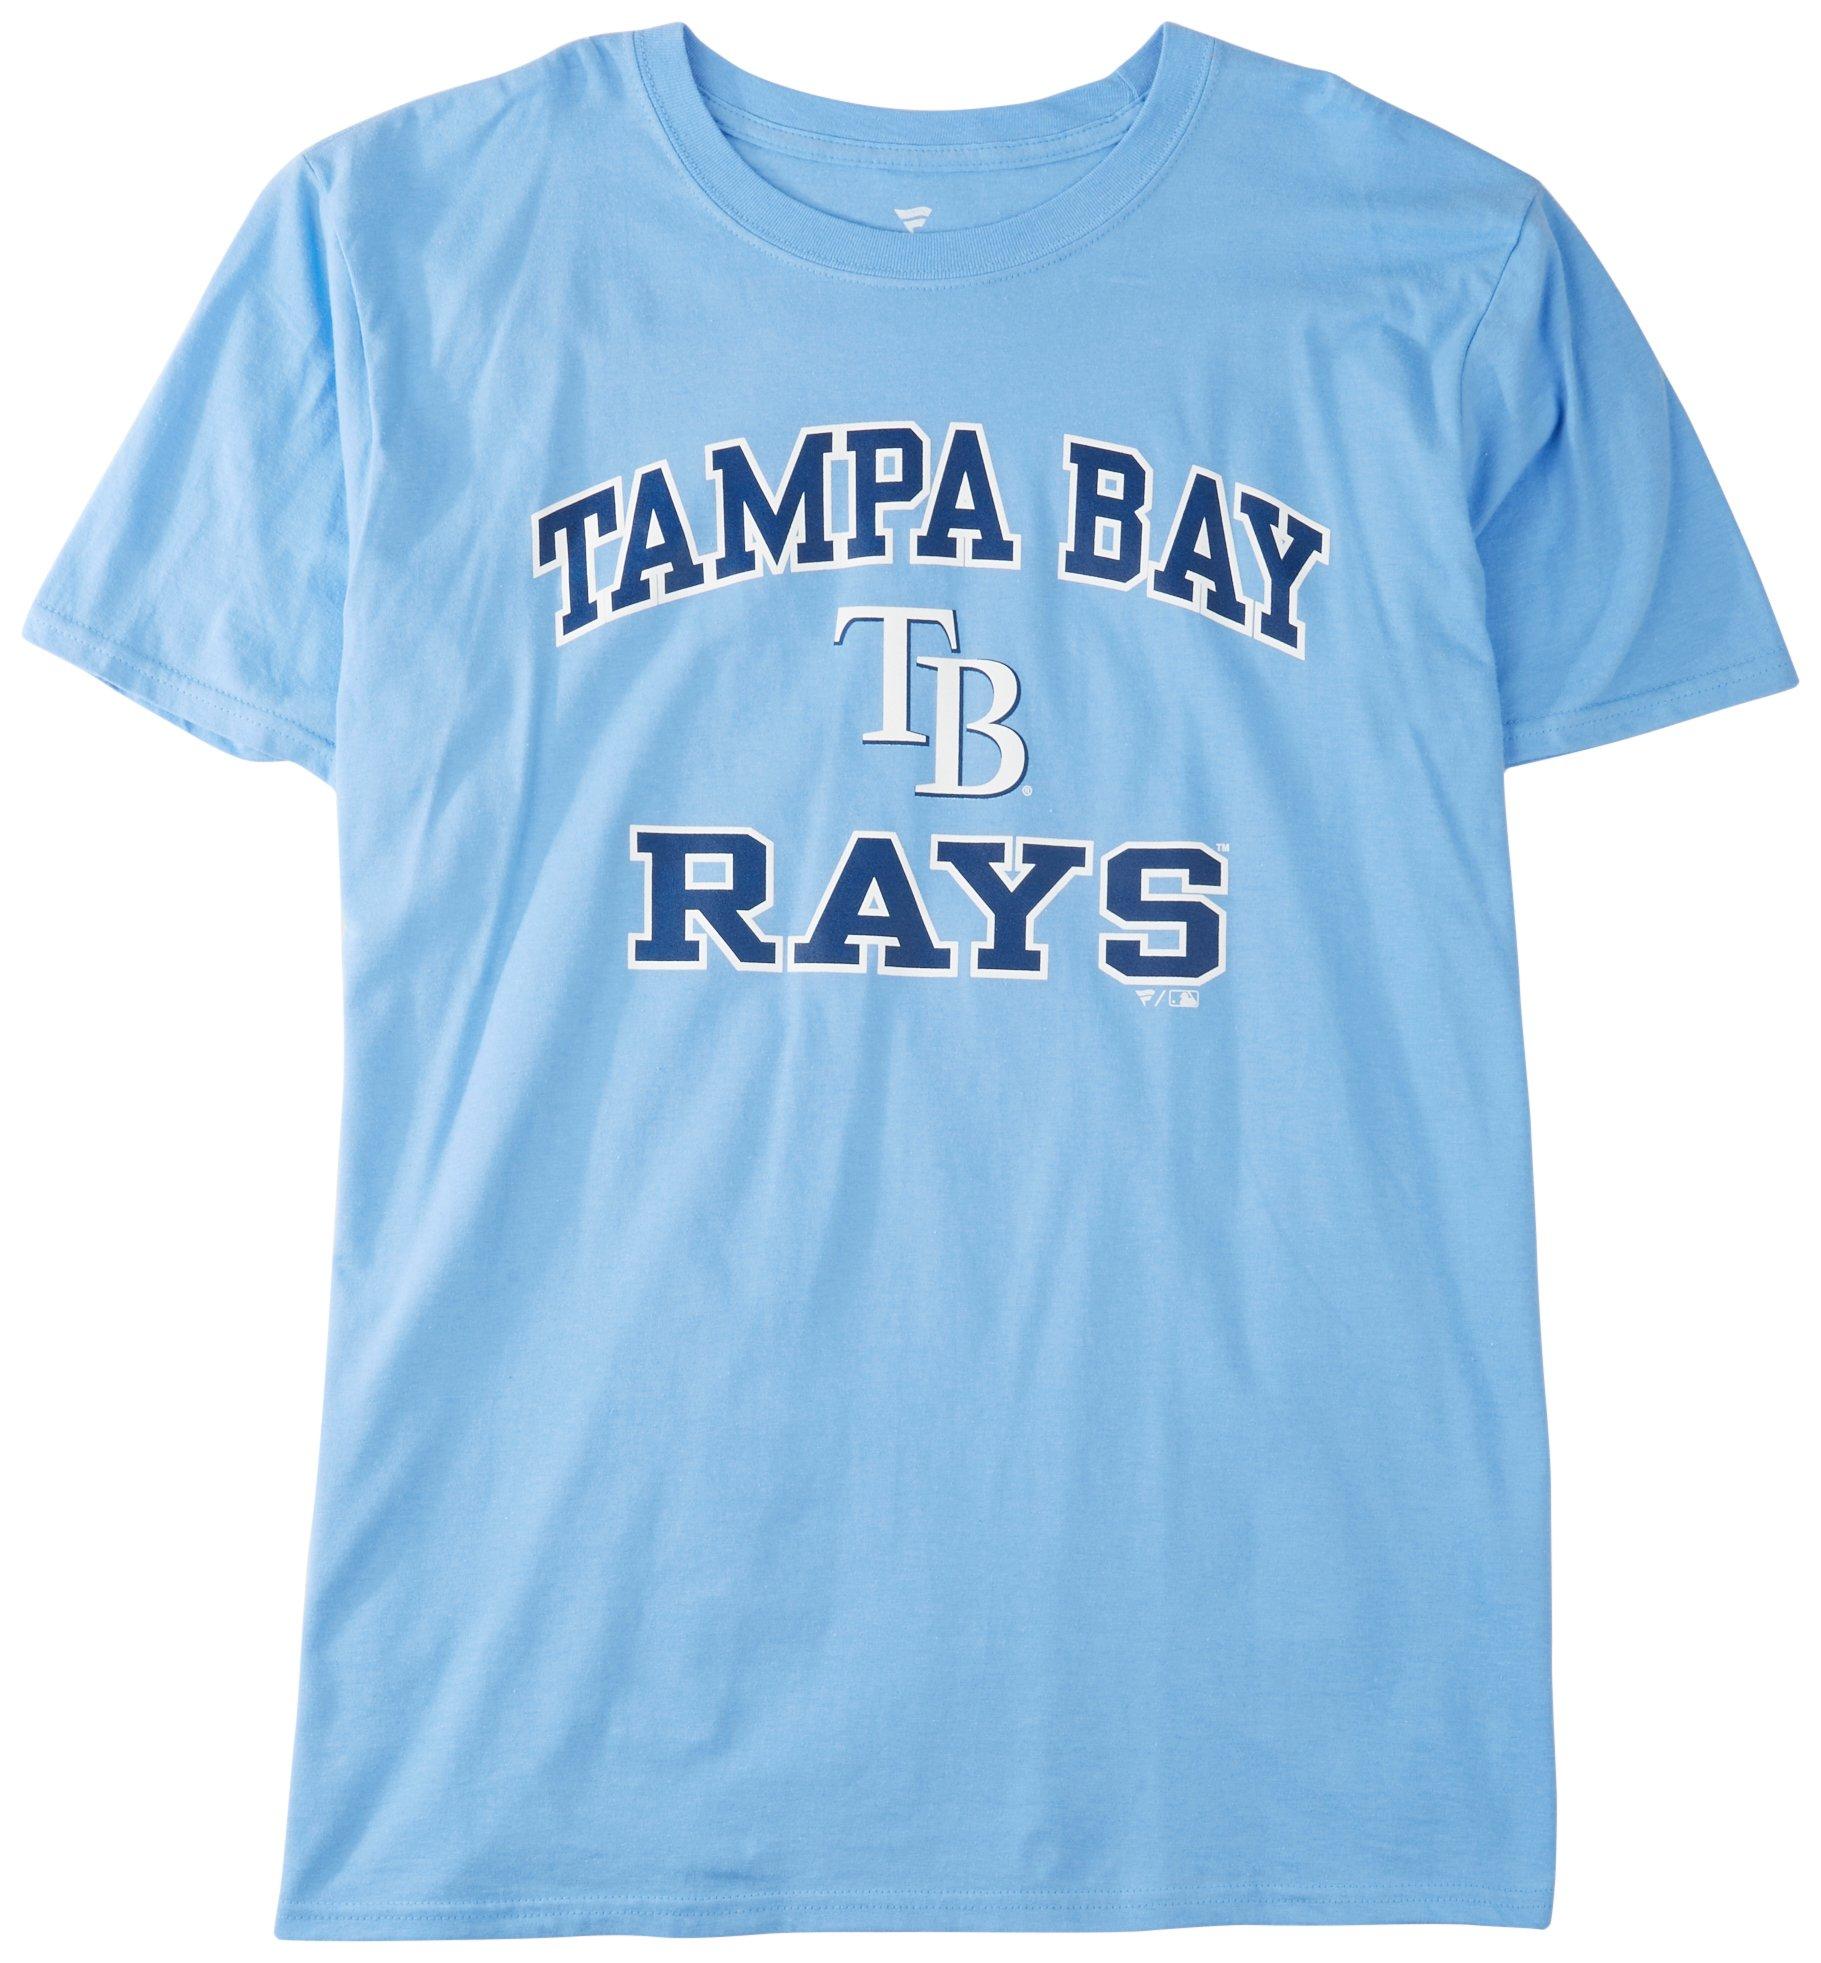 Tampa Bay Rays Mens Short Sleeve T-Shirt - Blue - Large